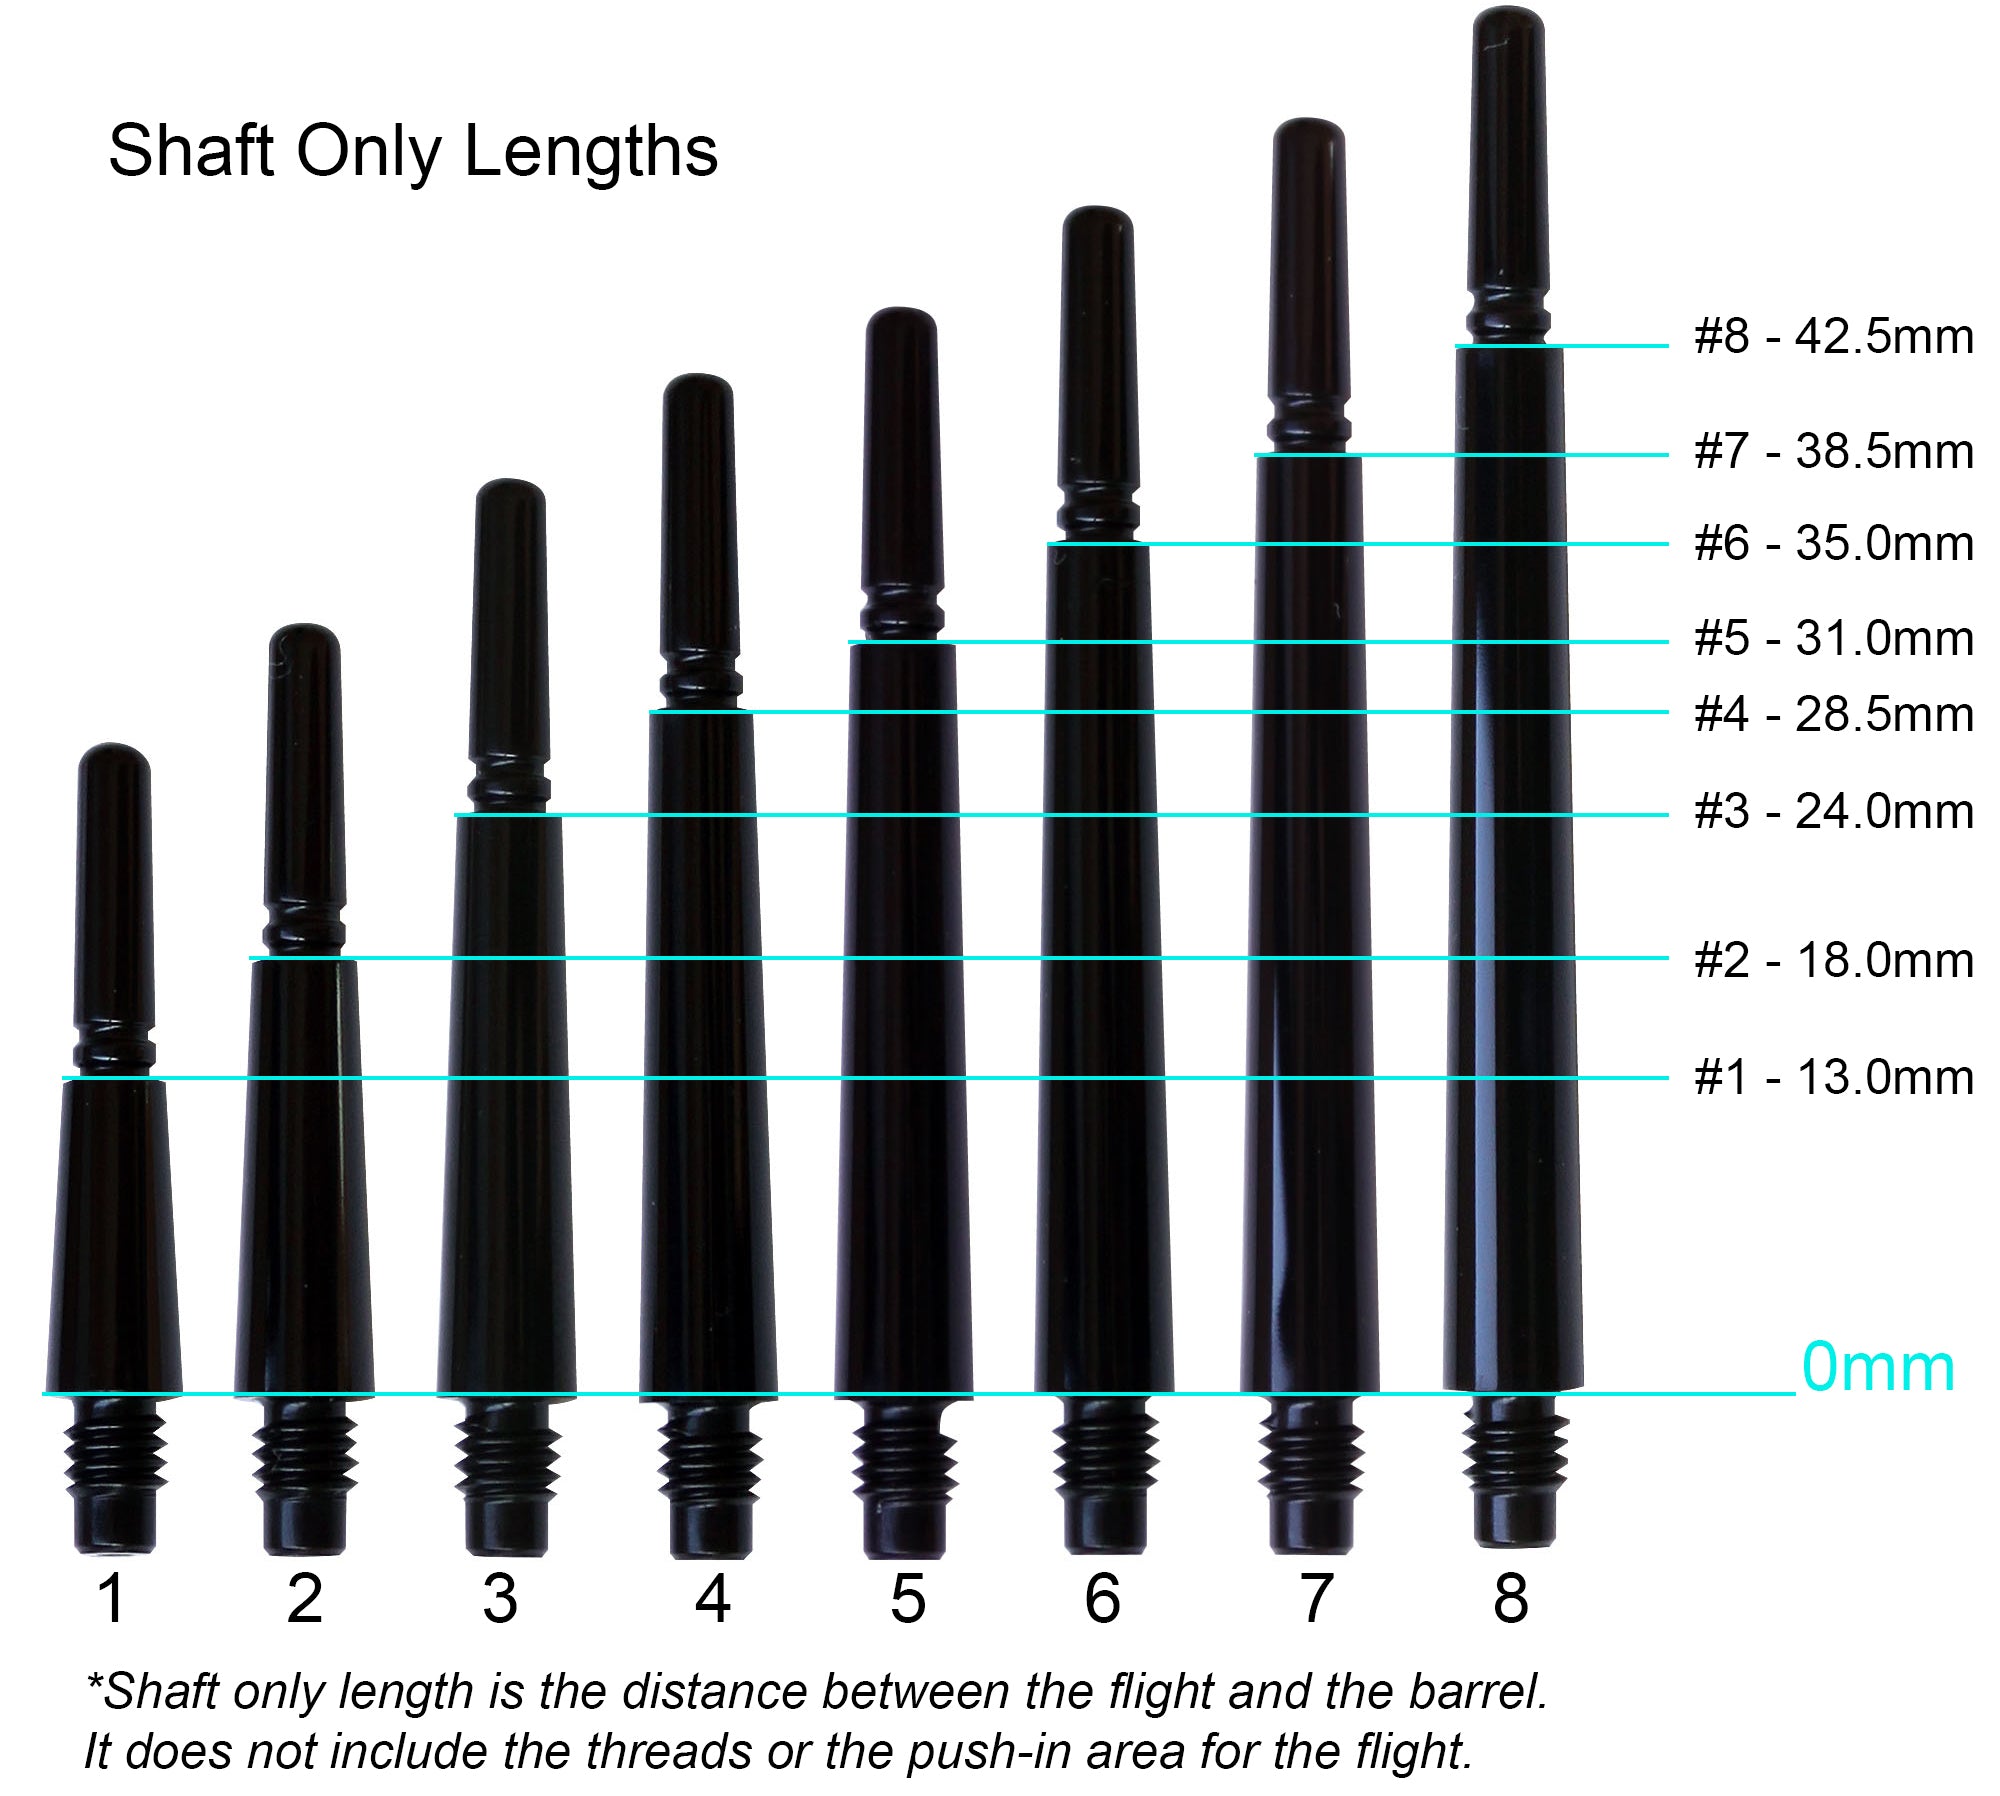 Fit Flight Gear Slim Locked Dart Shafts - Super X-Short #1 (13.0mm) Clear